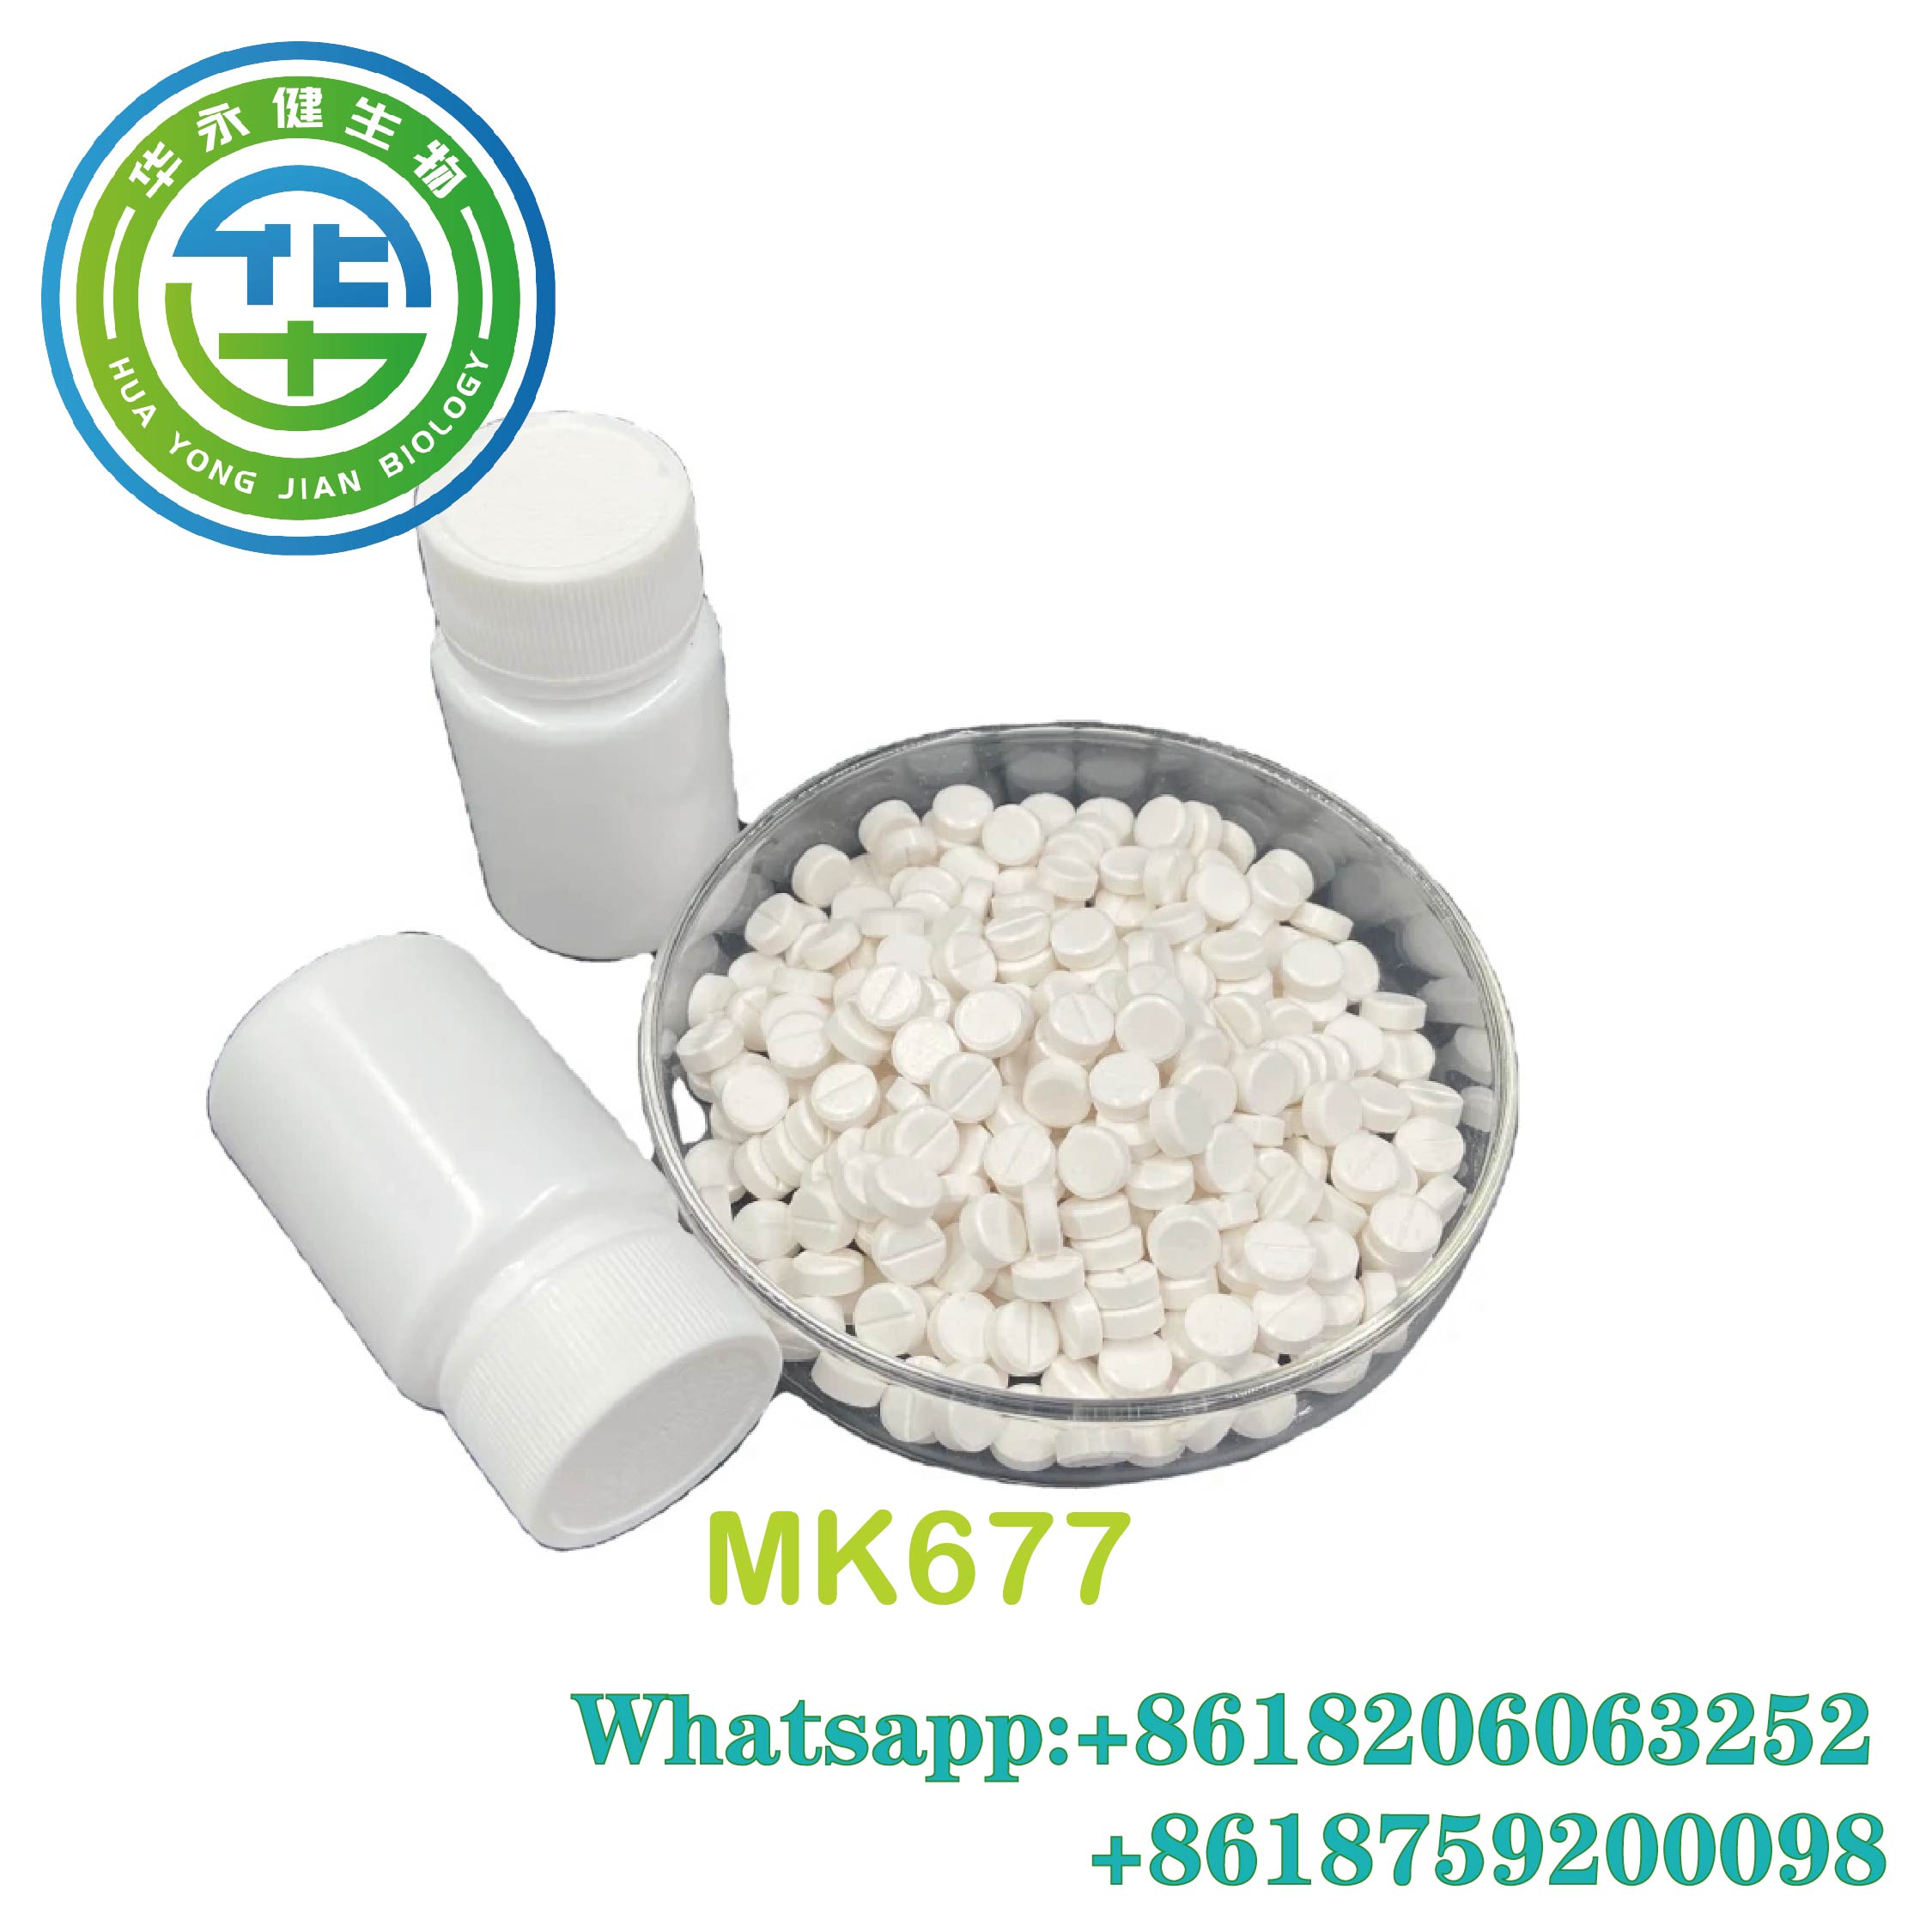 MK677,M7 10mg mesylate SARMs Raw Powder Pills Ibutamoren CAS 159634-47-6 100pcs/bottle For Women